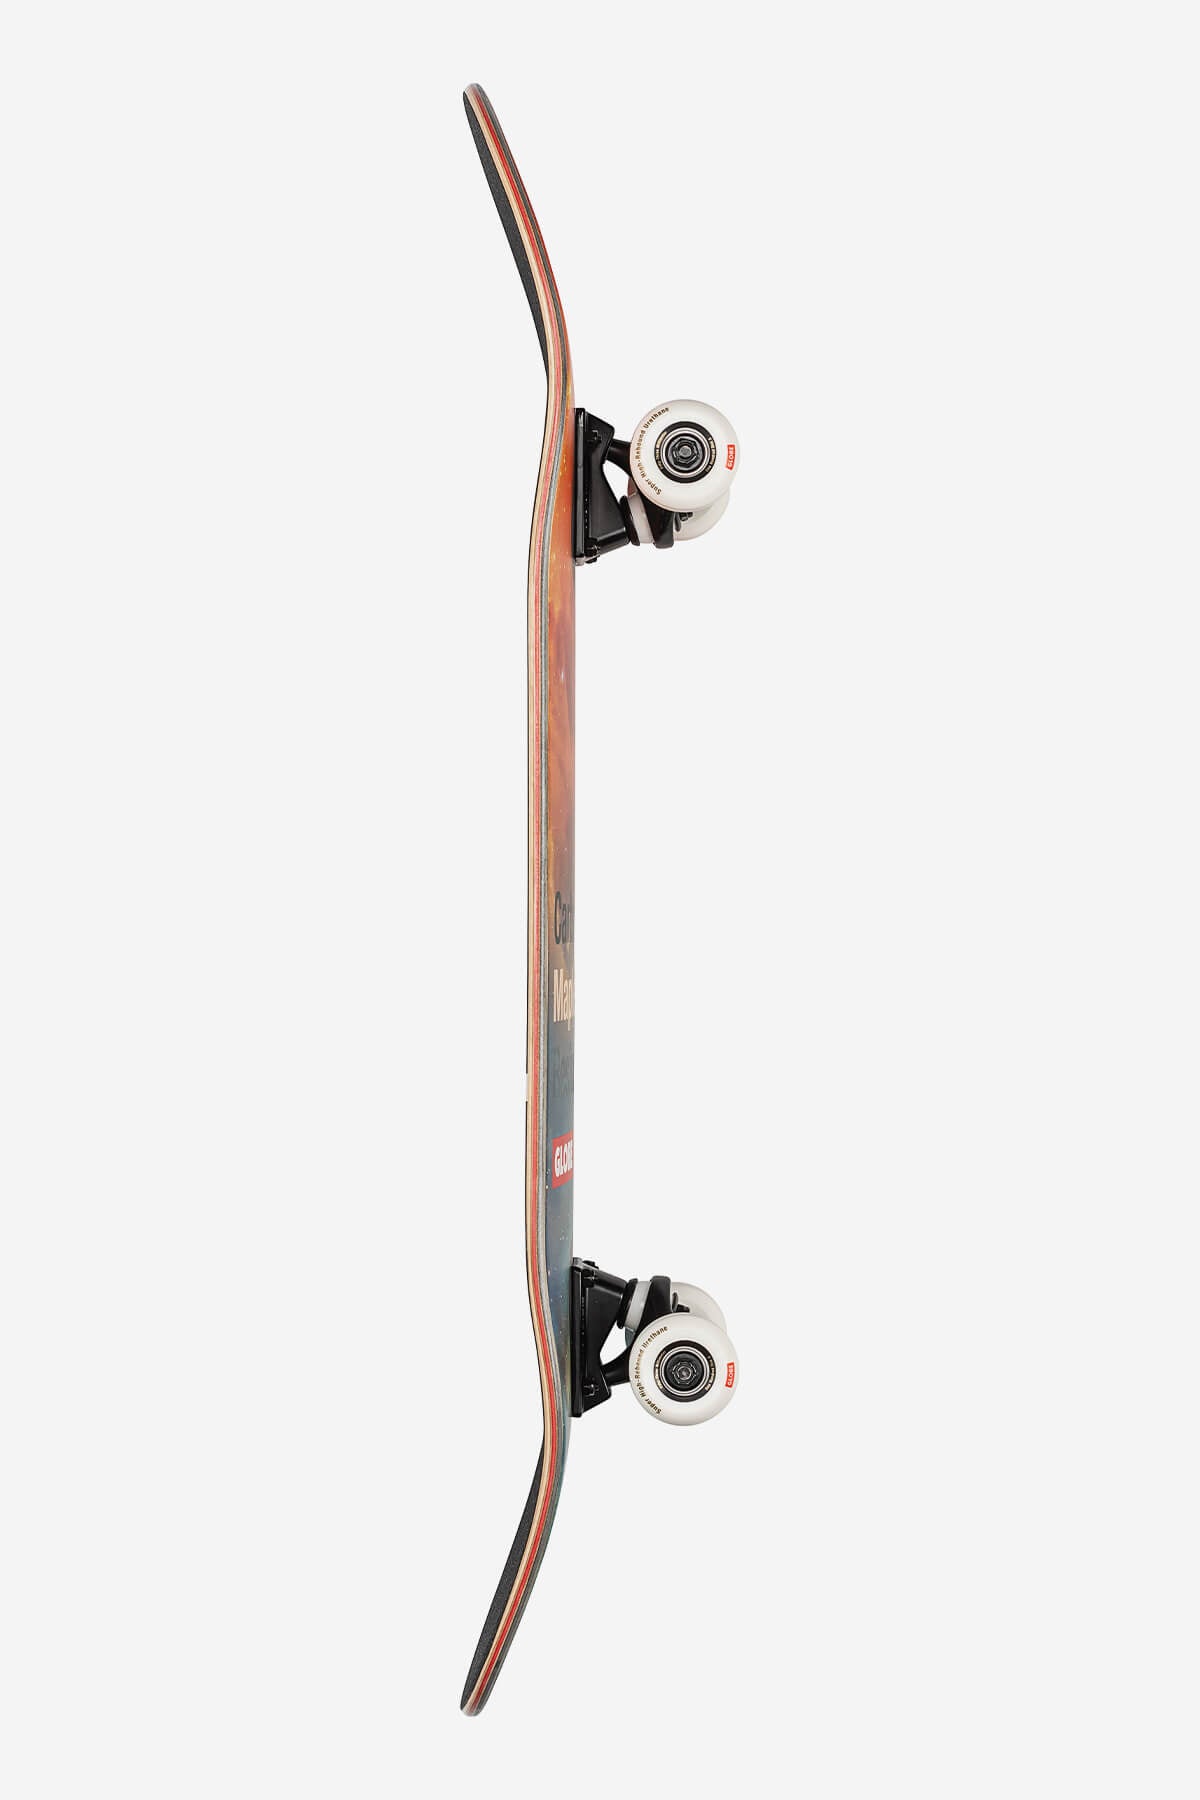 Globe - G3 Bar - Impact/Nebula - 8.125" Completo Skateboard